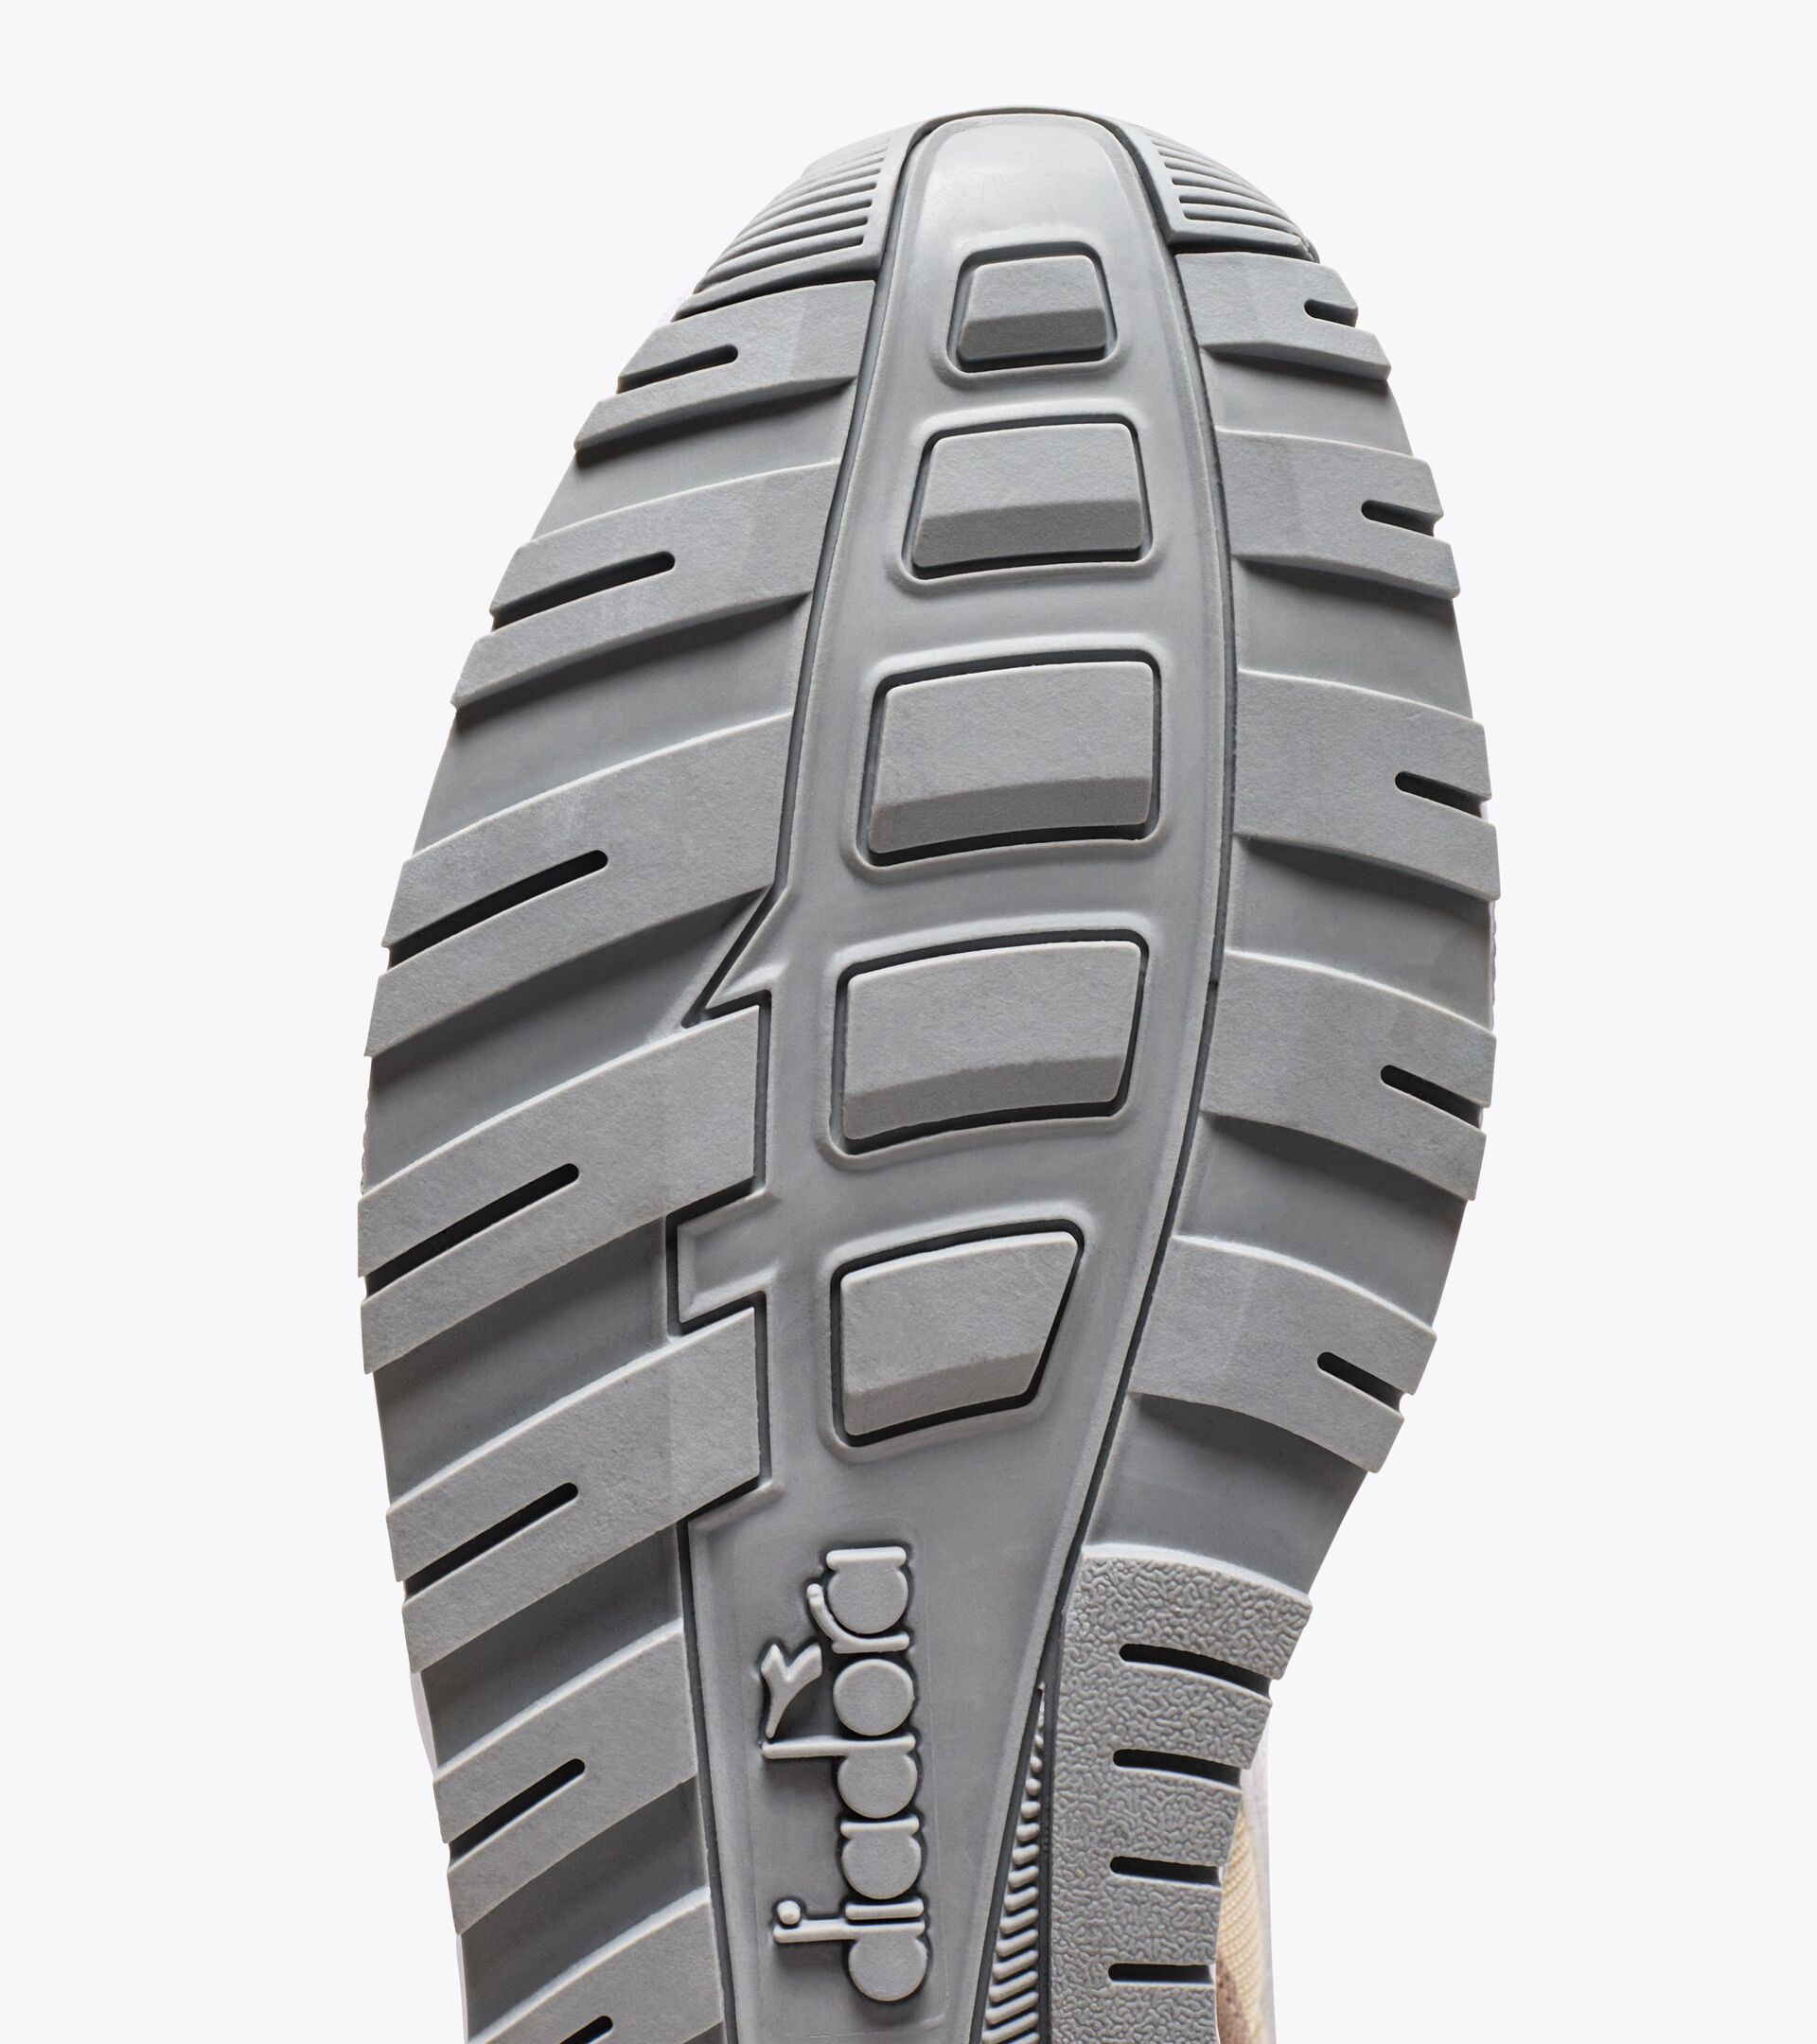 Zapatilla deportiva - Gender neutral N902 MRRN OSCURO/BEIGE CLARO - Diadora